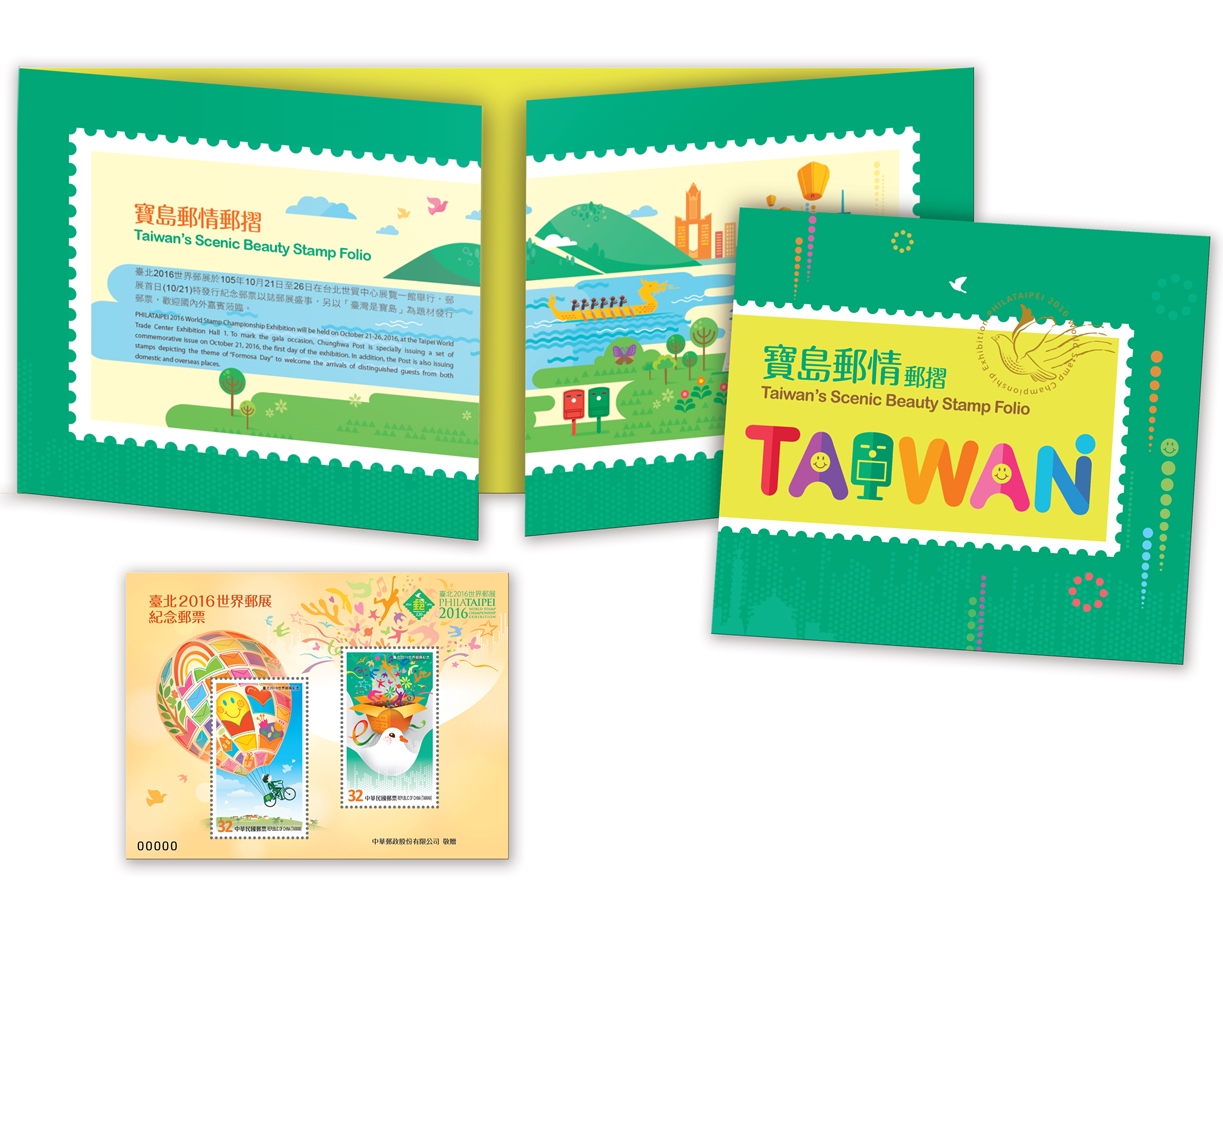 Taiwan’s Scenic Beauty stamp folio 